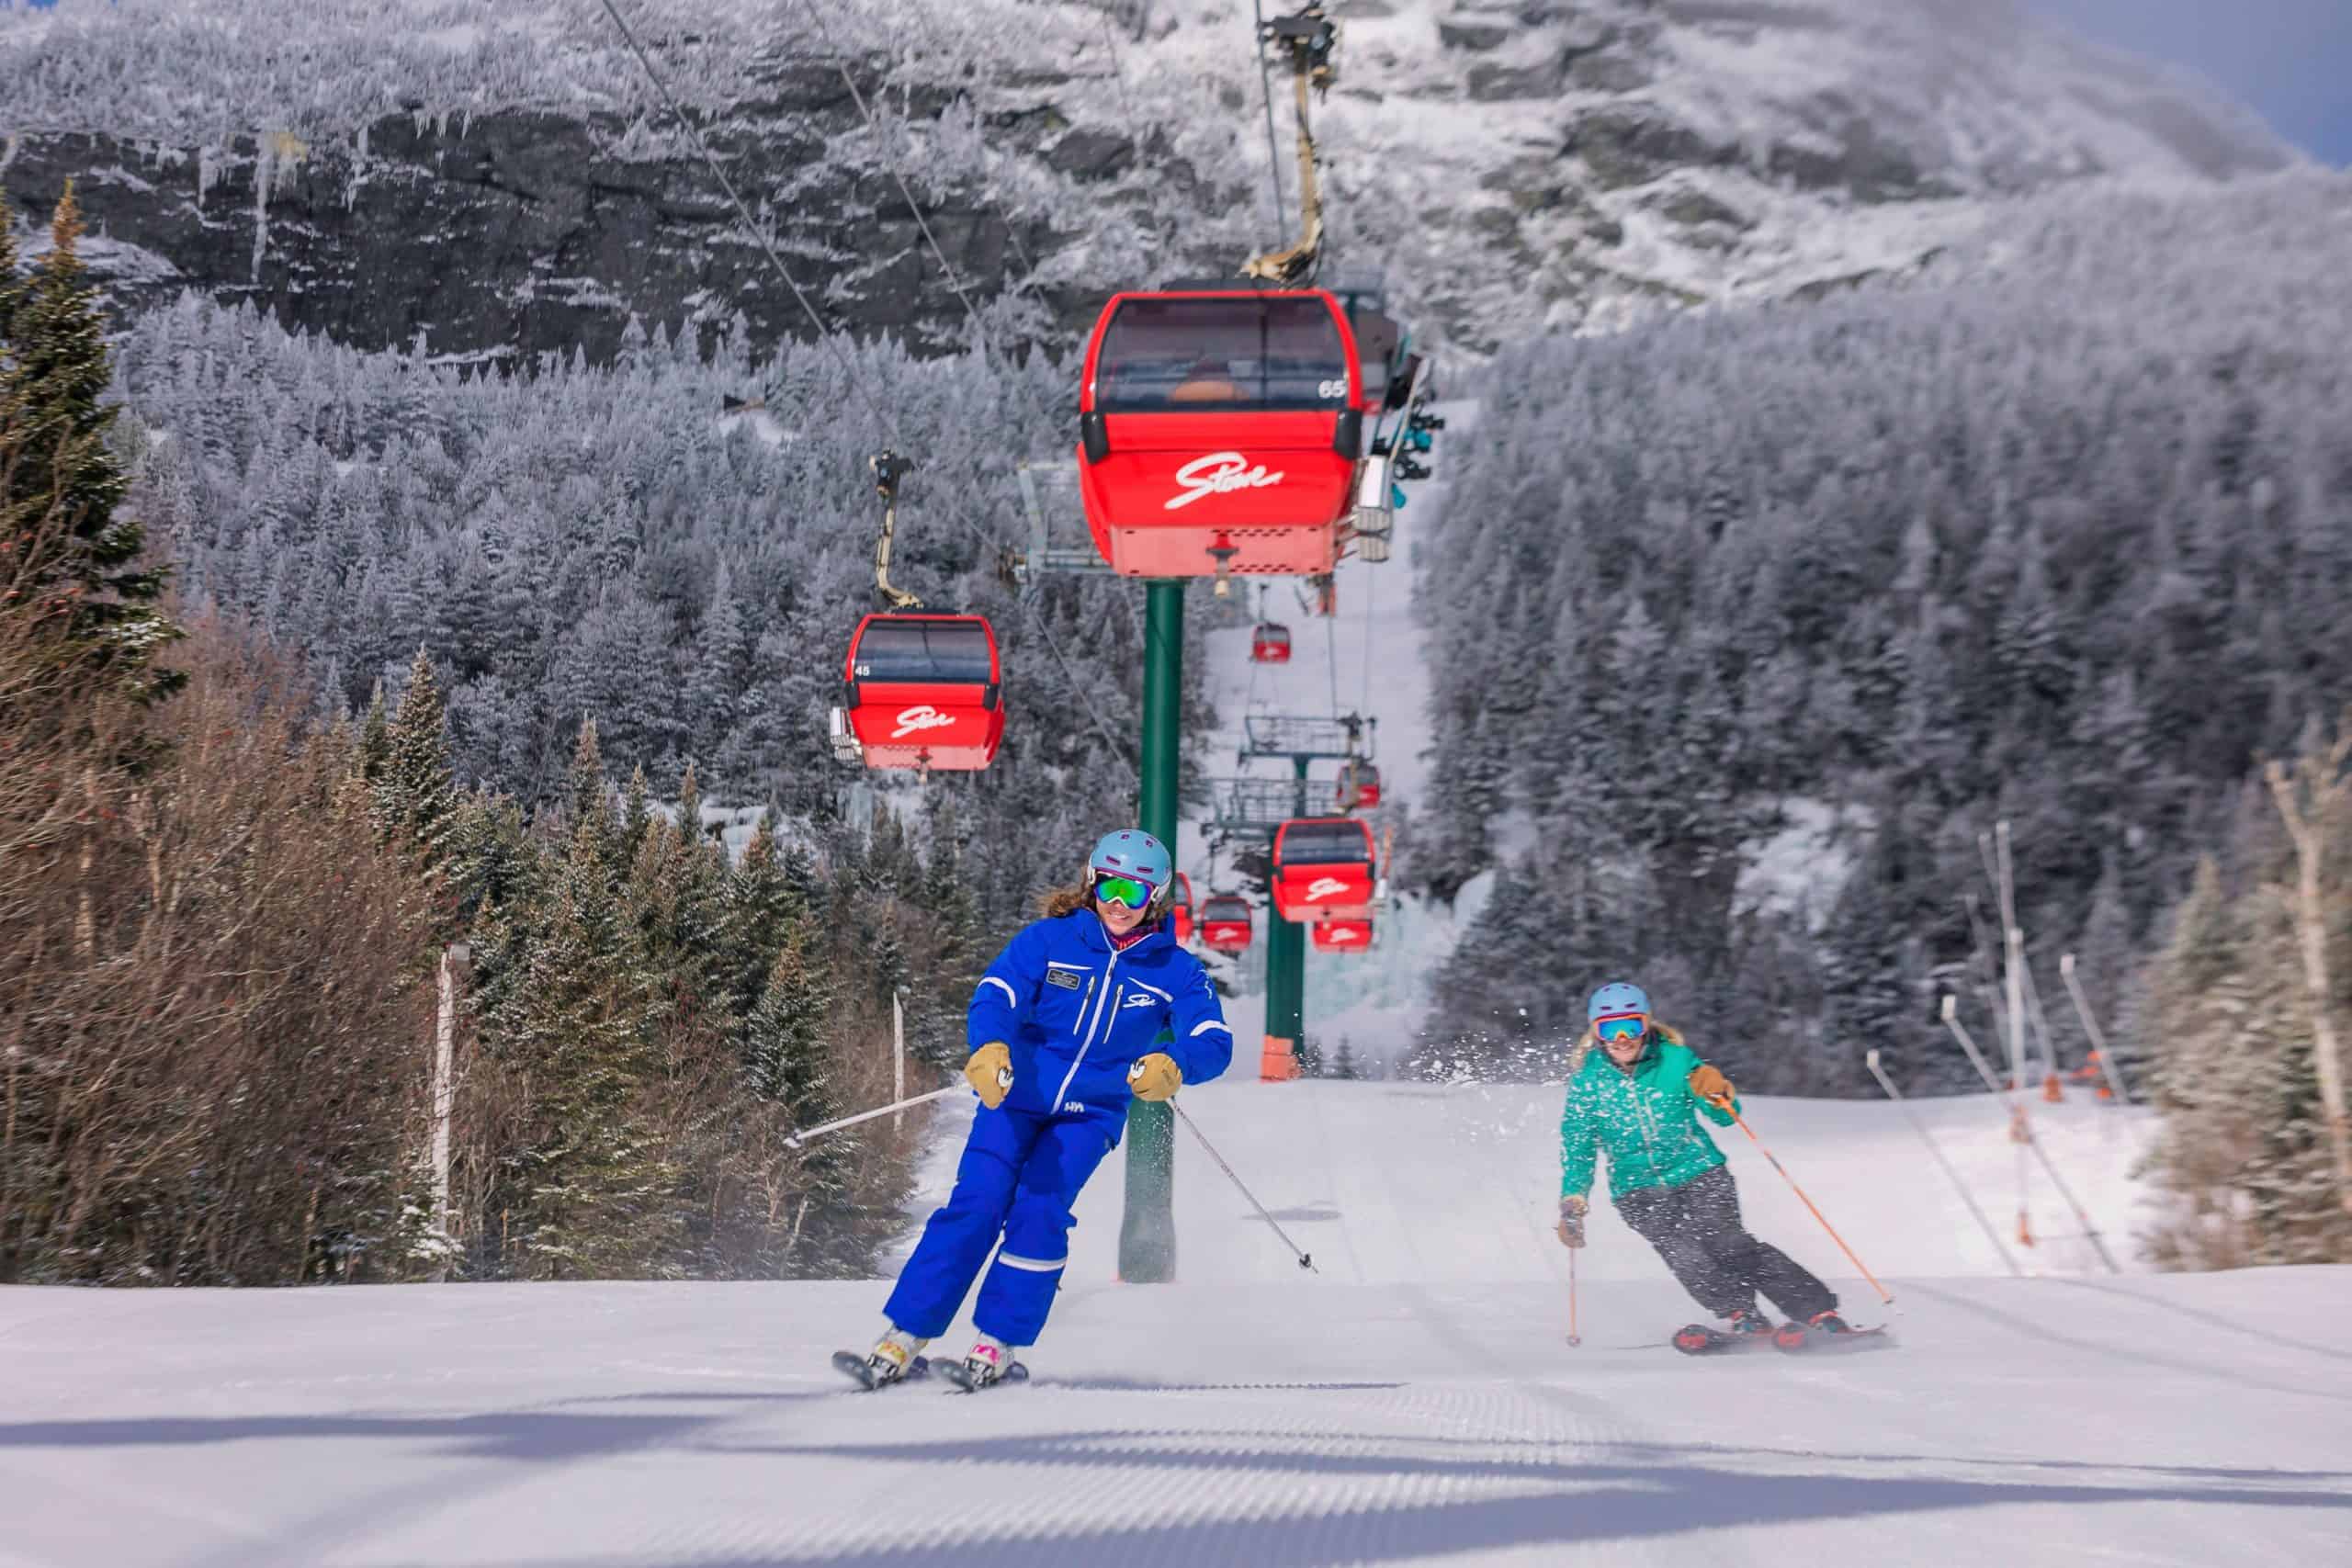 Stowe Mountain Resort - Winter Gondola with Skiers